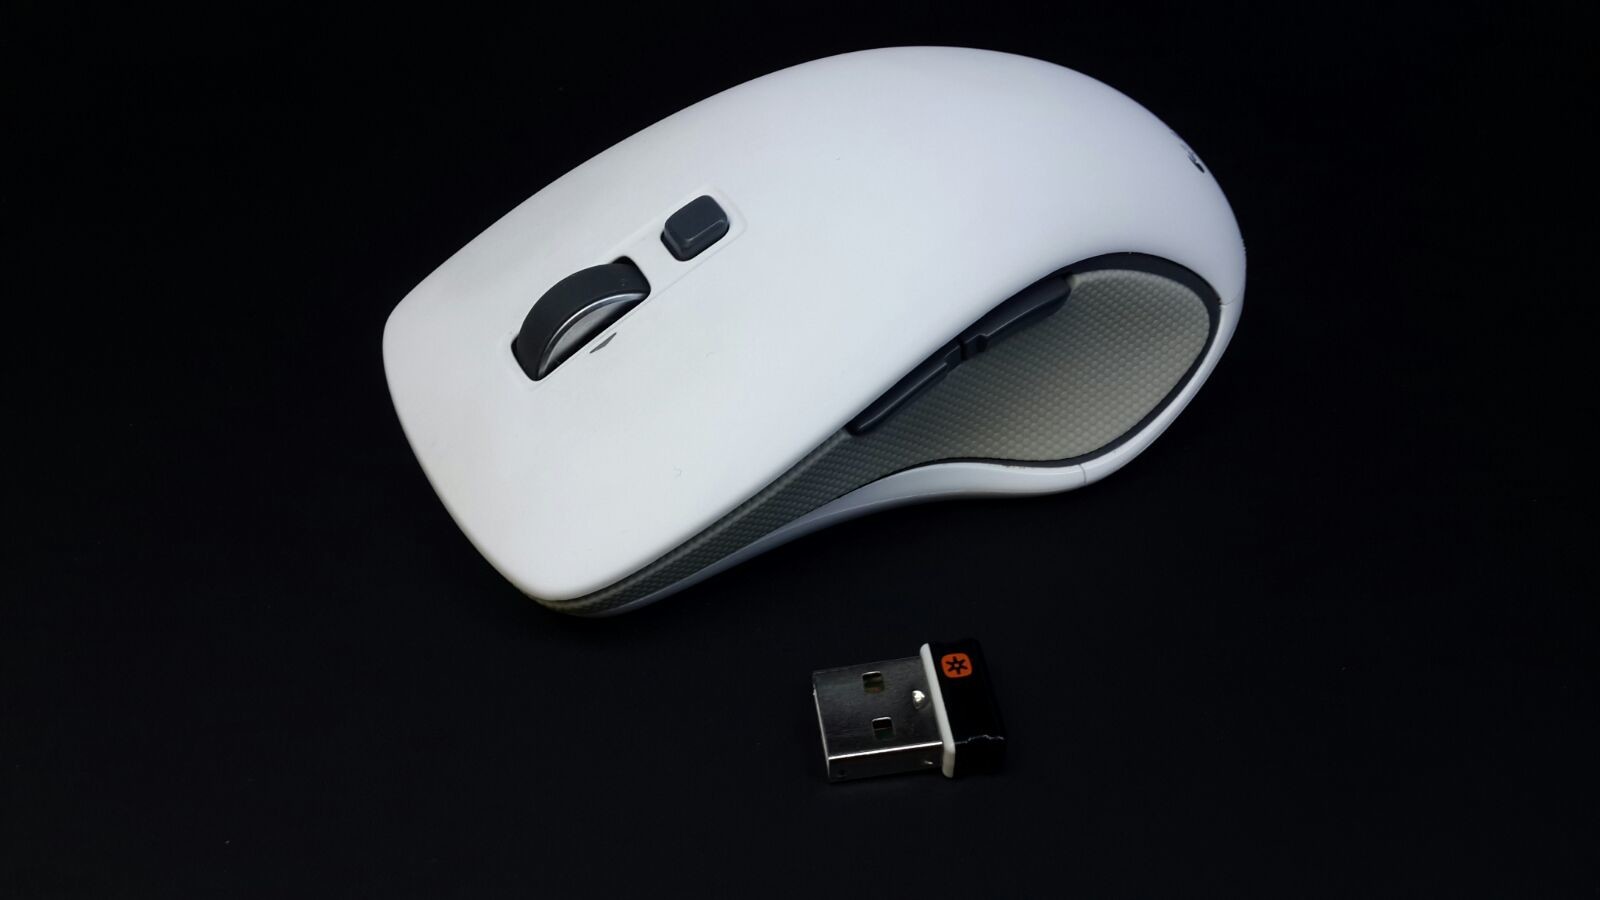 Logitech M560 Wireless Mouse Beyaz Renk​ 50 TL Kargo Dahil